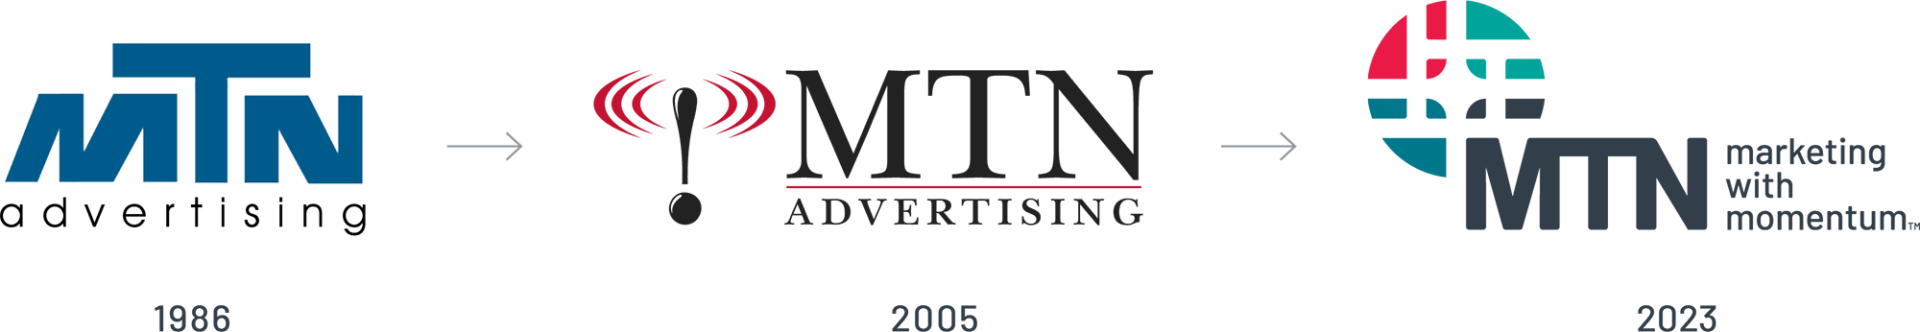 MTN logo progression